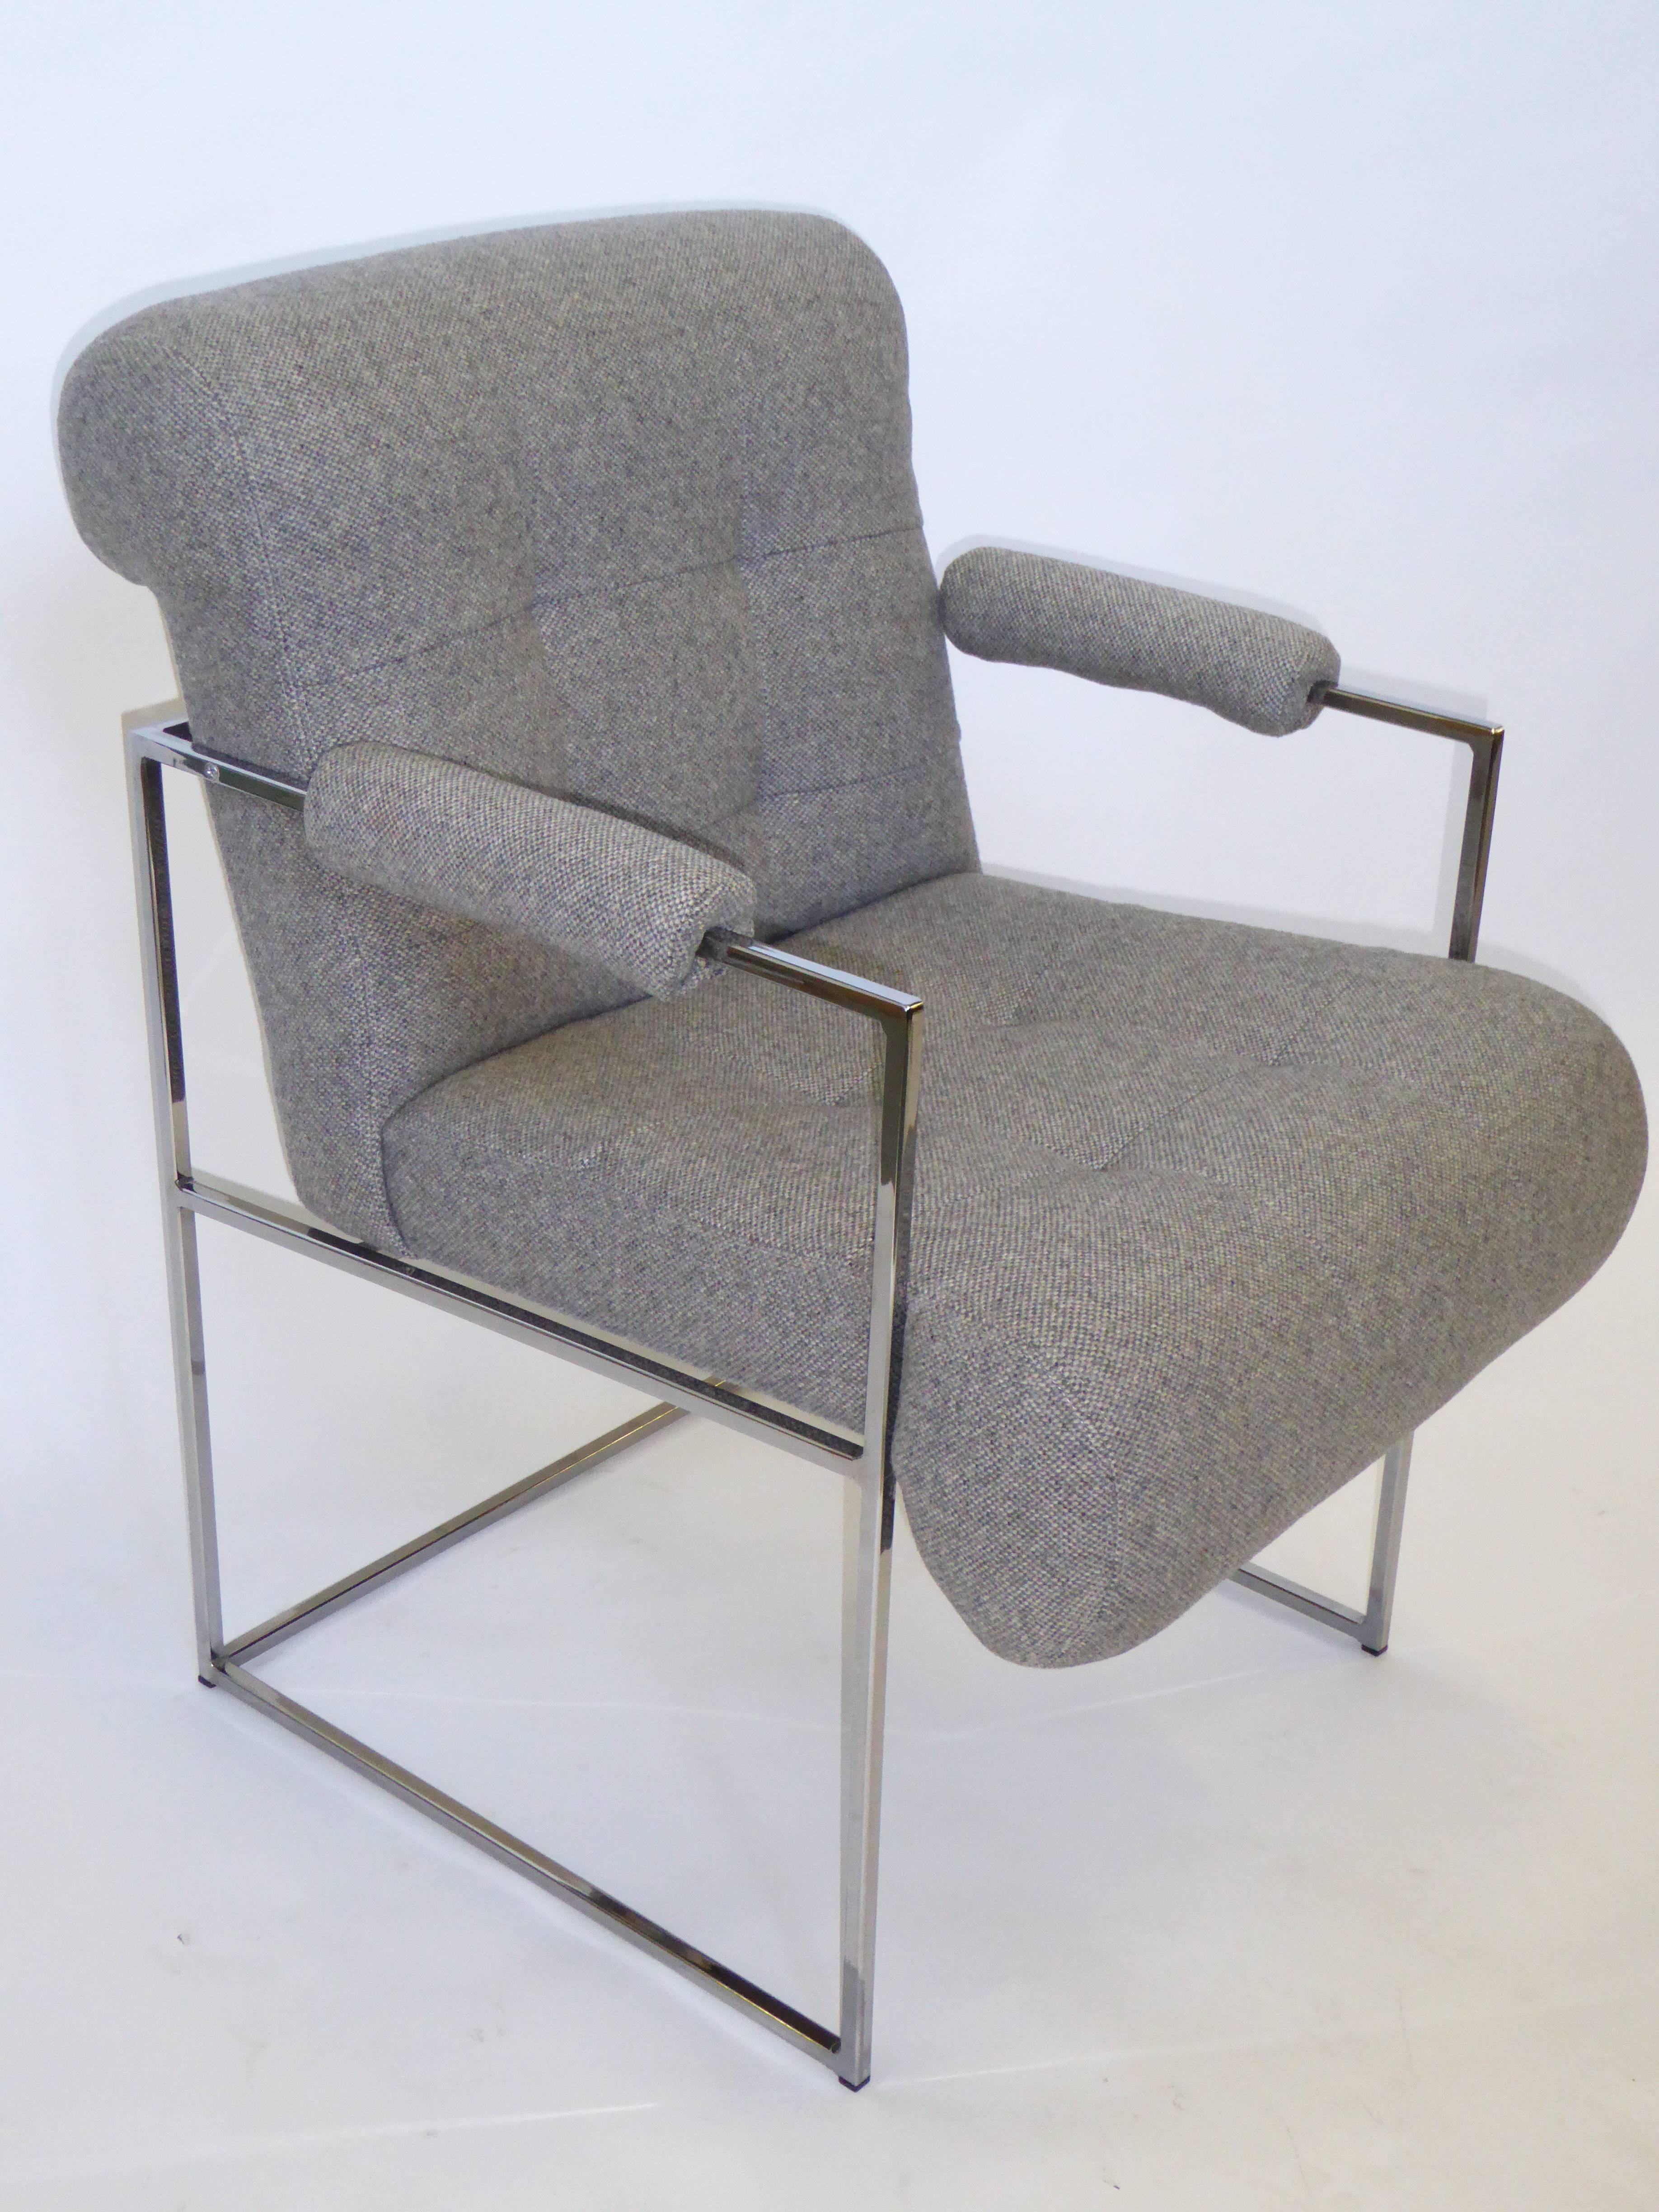 American Eight Modern Plush Milo Baughman Thin Line Armed Dining Chairs